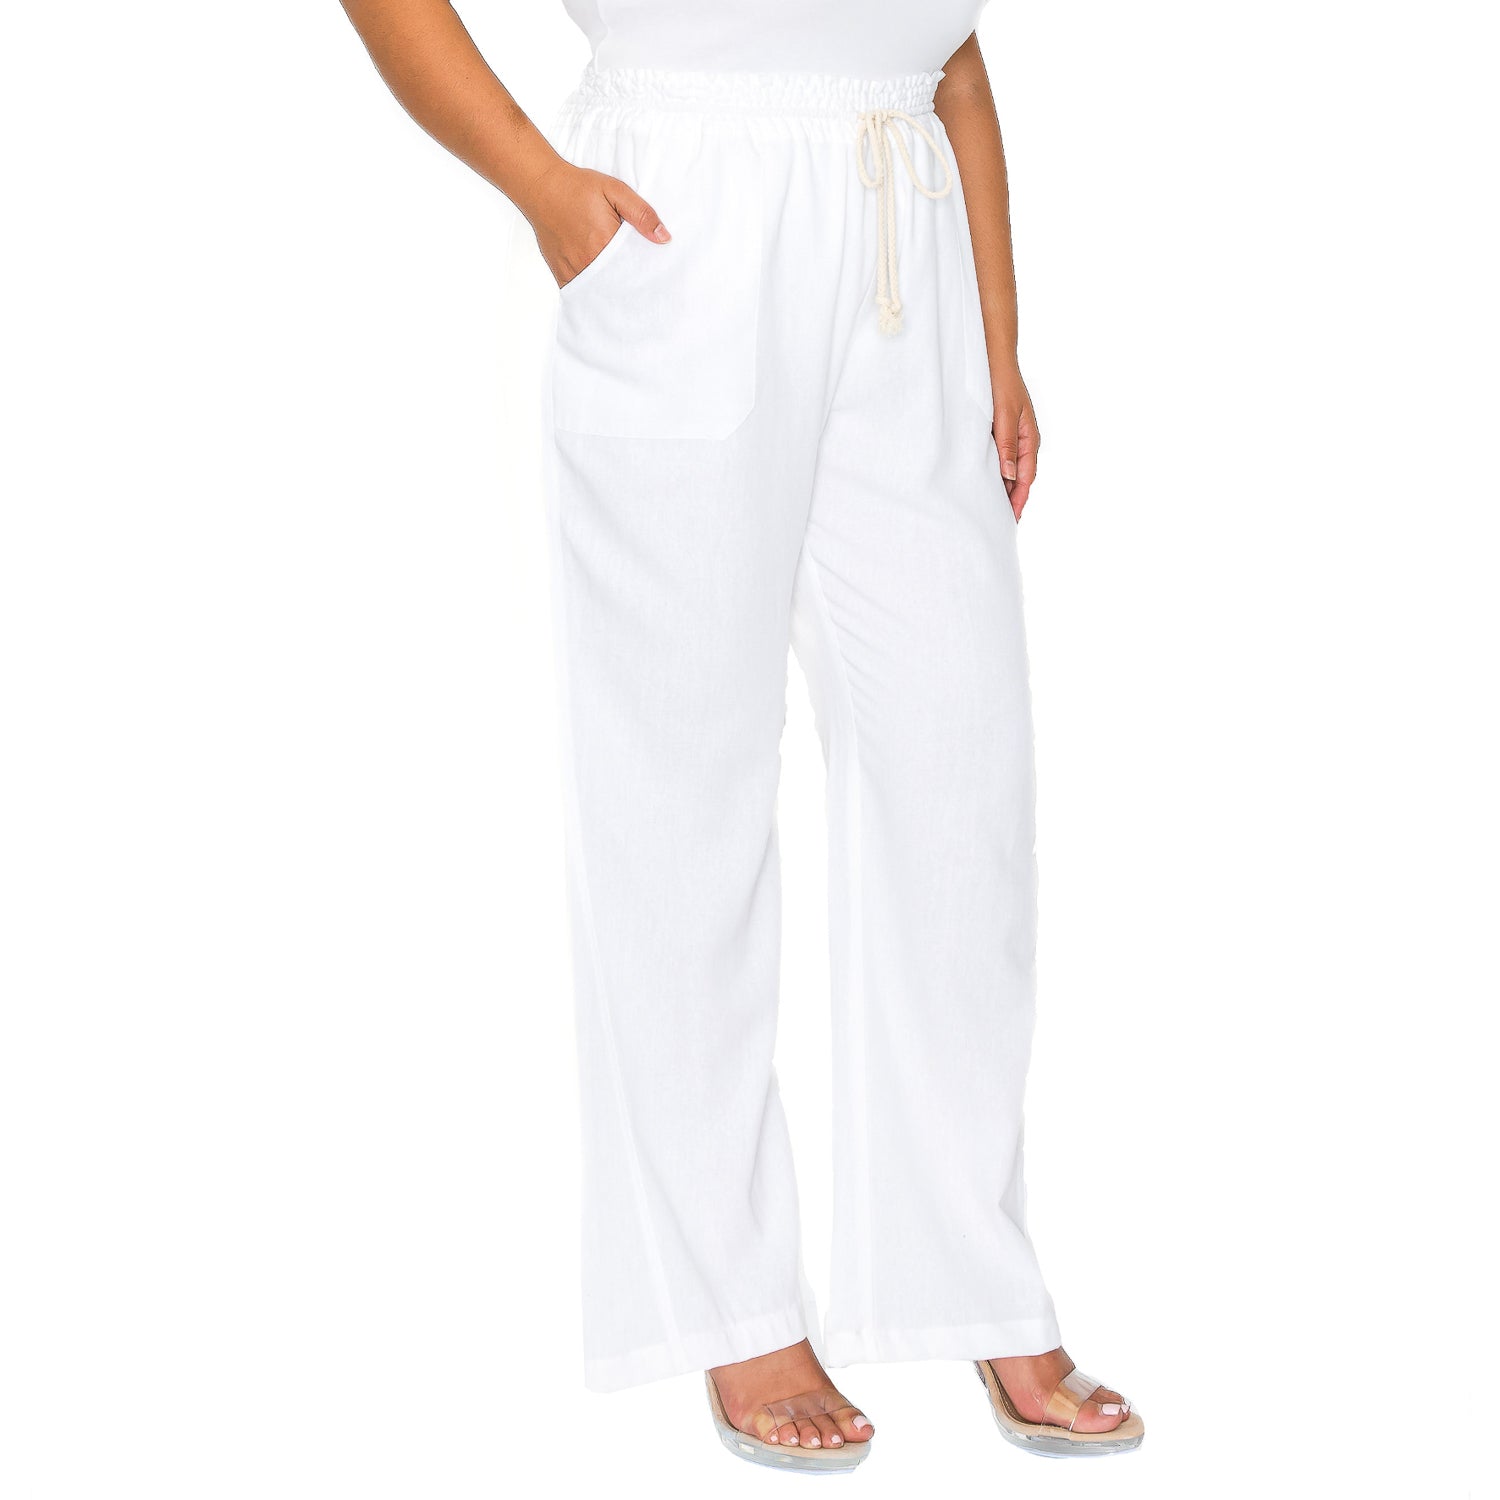 Plus Size] Linen Pants 32 Inseam Drawstring Smocked Waist Beach Pant